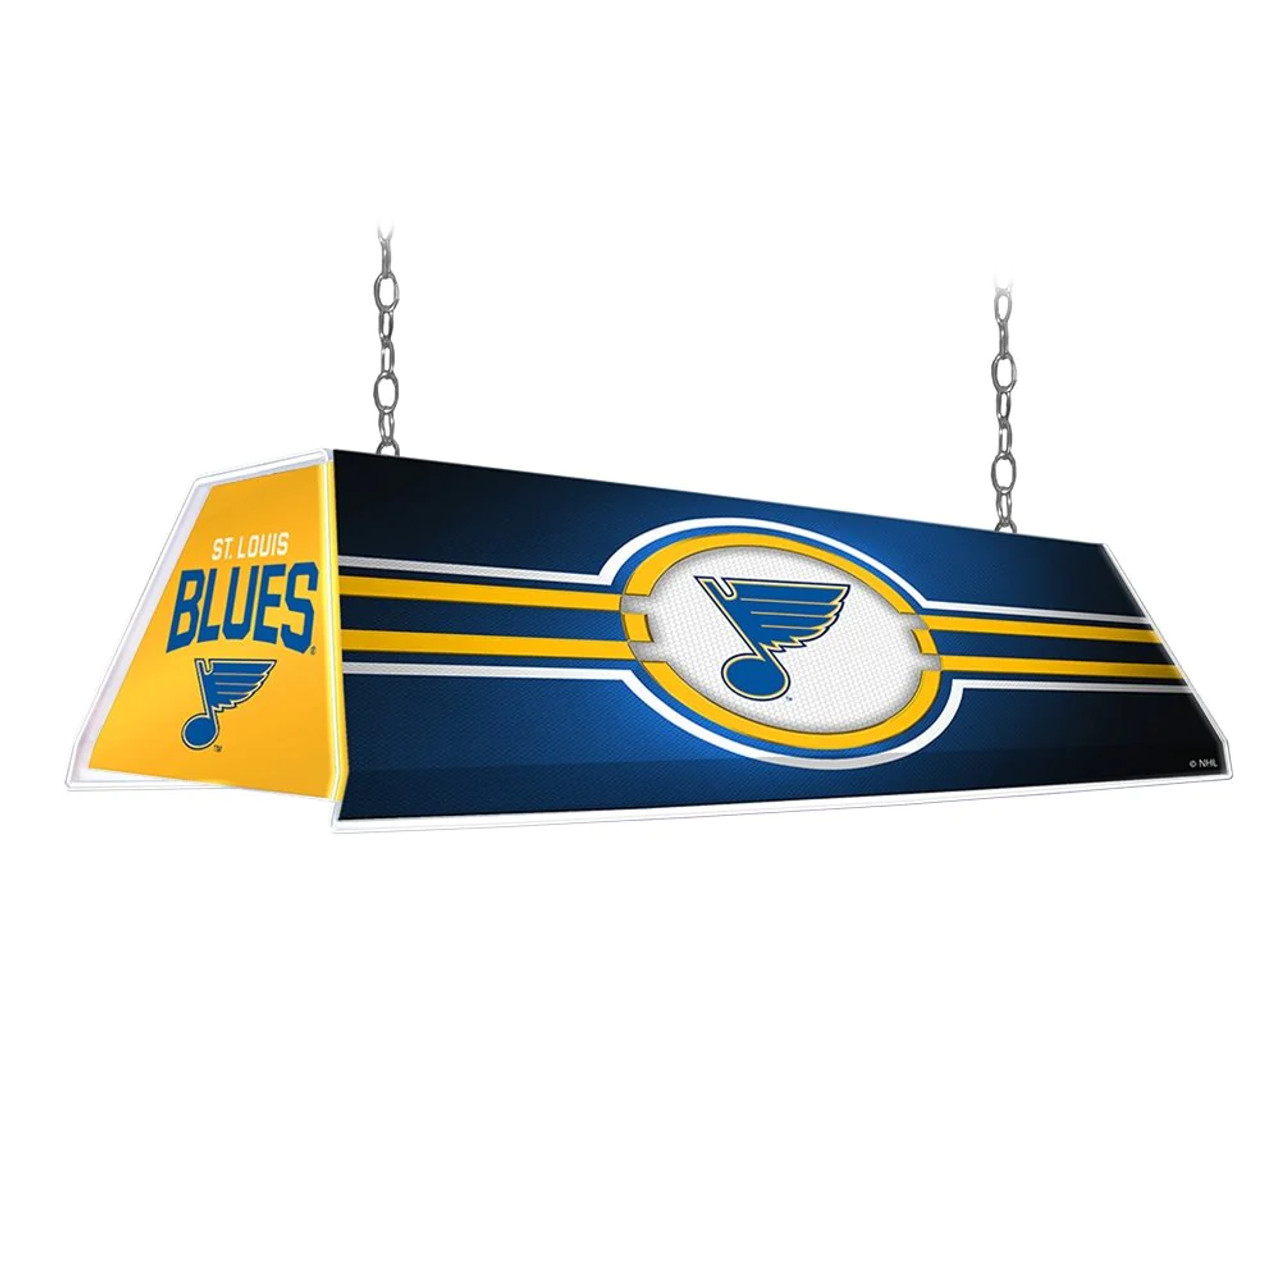 St. Louis Blues: Game Table Light, NHSTLB-410-01B, NHSTLB-410-01A